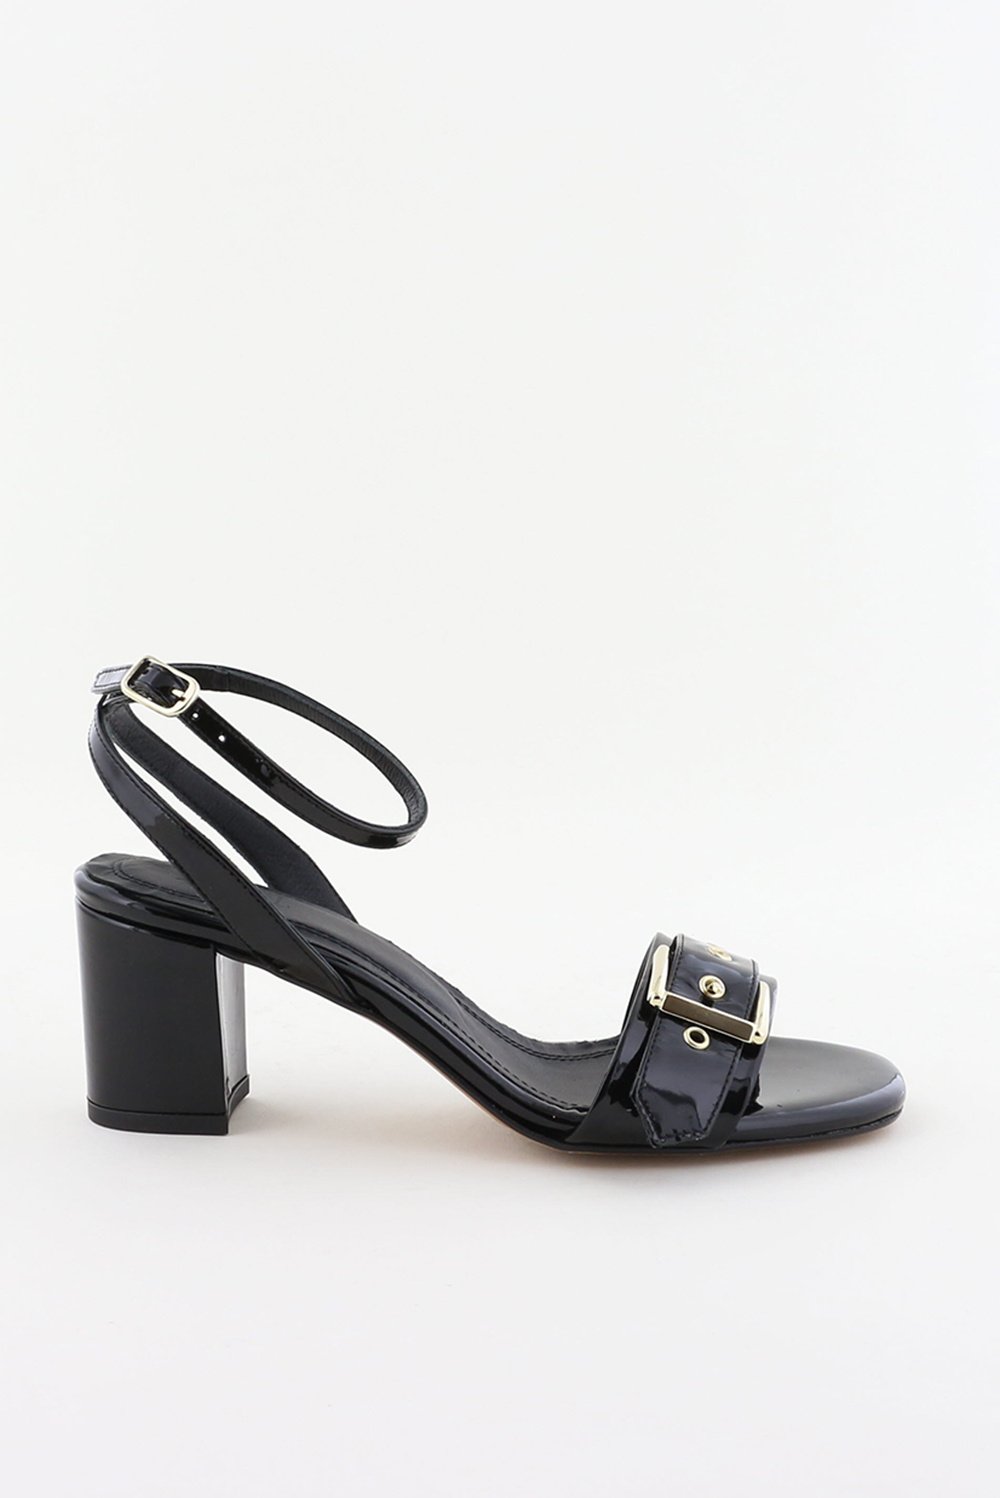 Toral sandalen TL-MELISSA met blokhak zwart